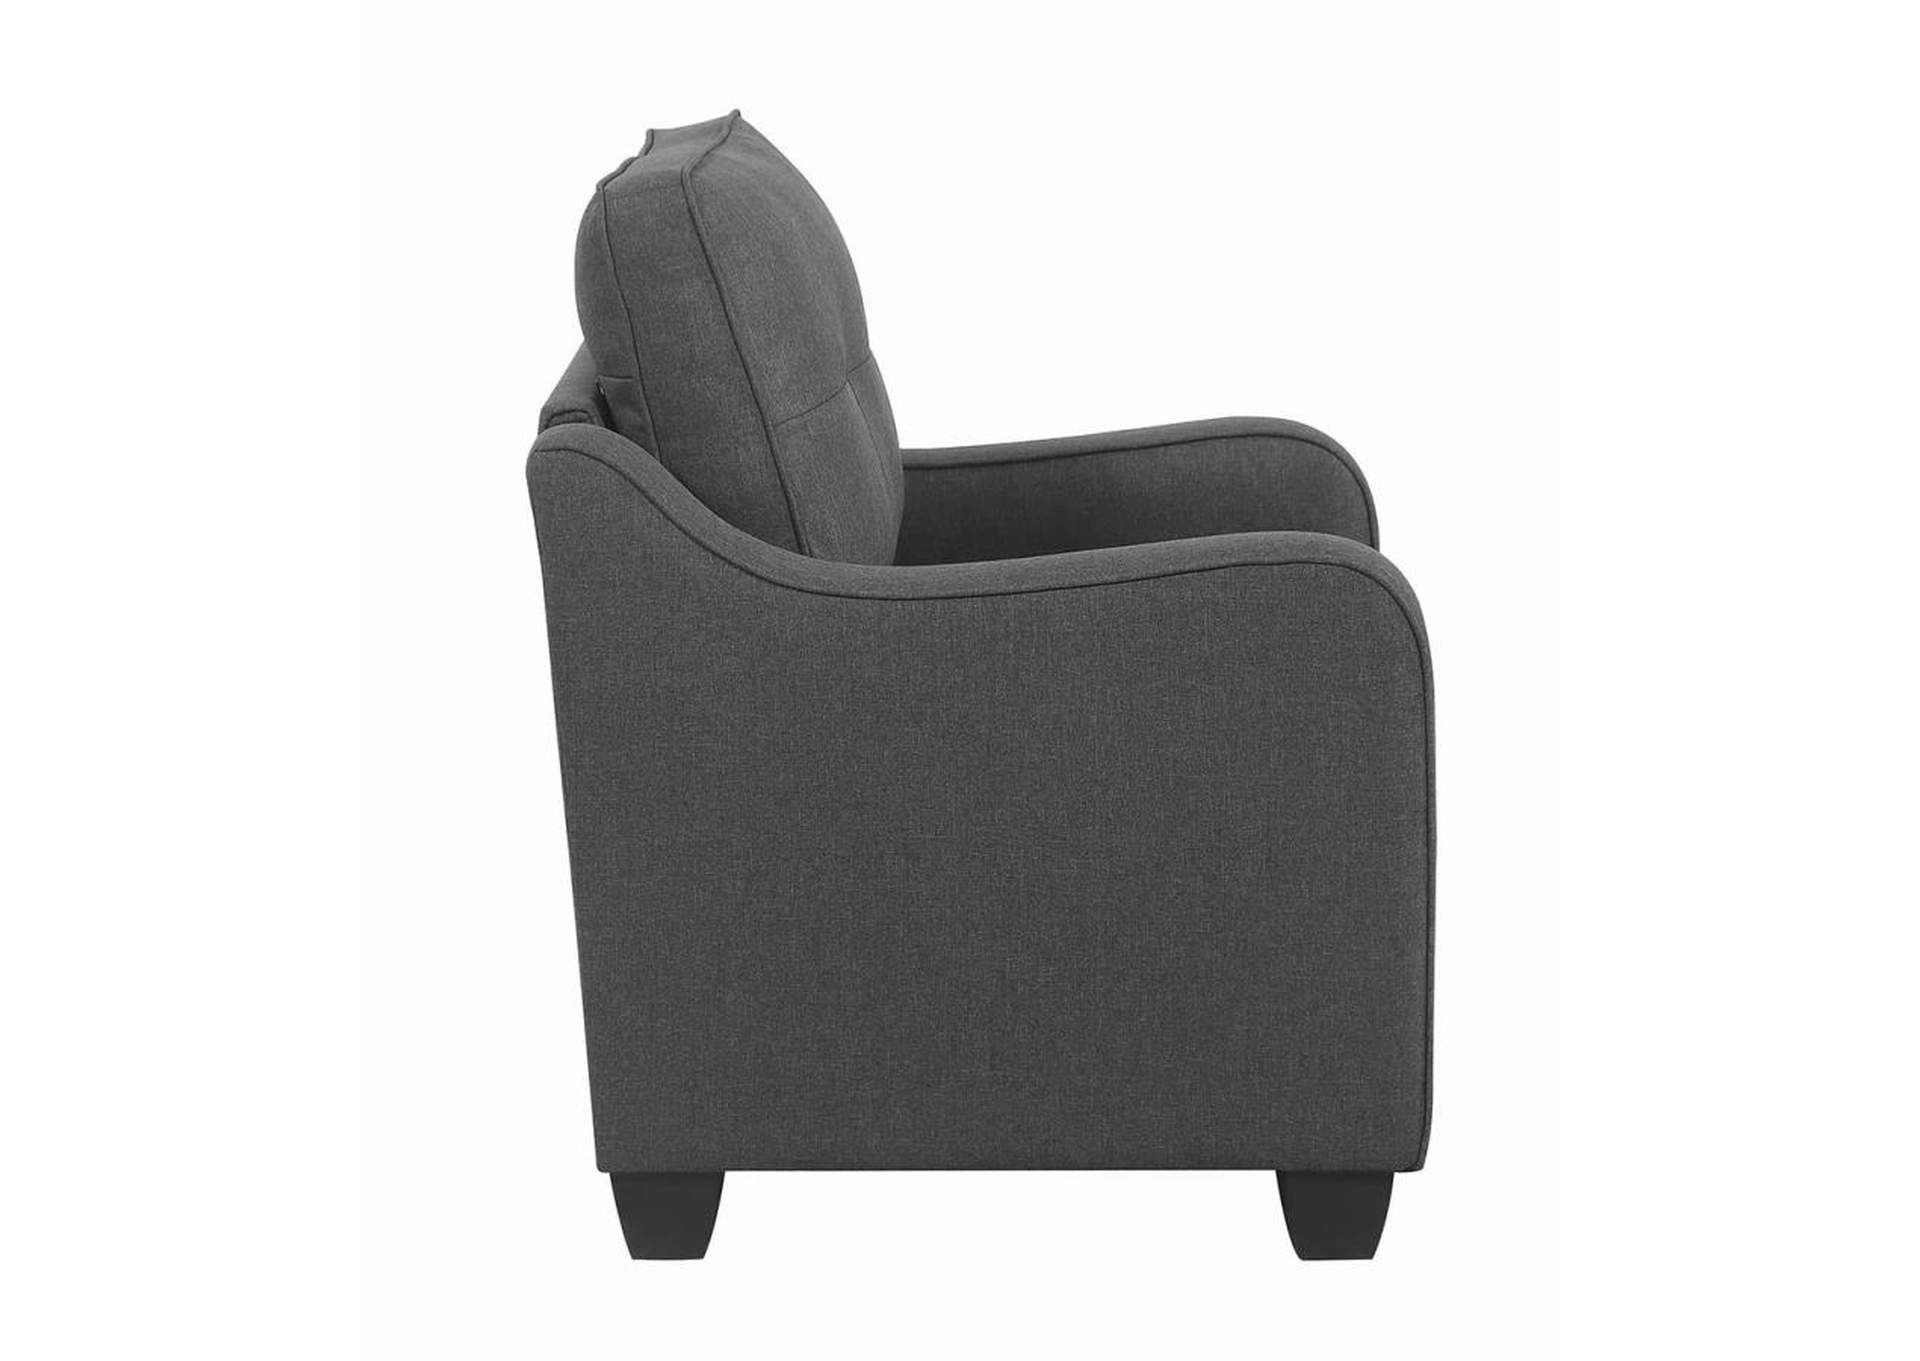 Nicolette Upholstered Tufted Chair Dark Grey,Coaster Furniture